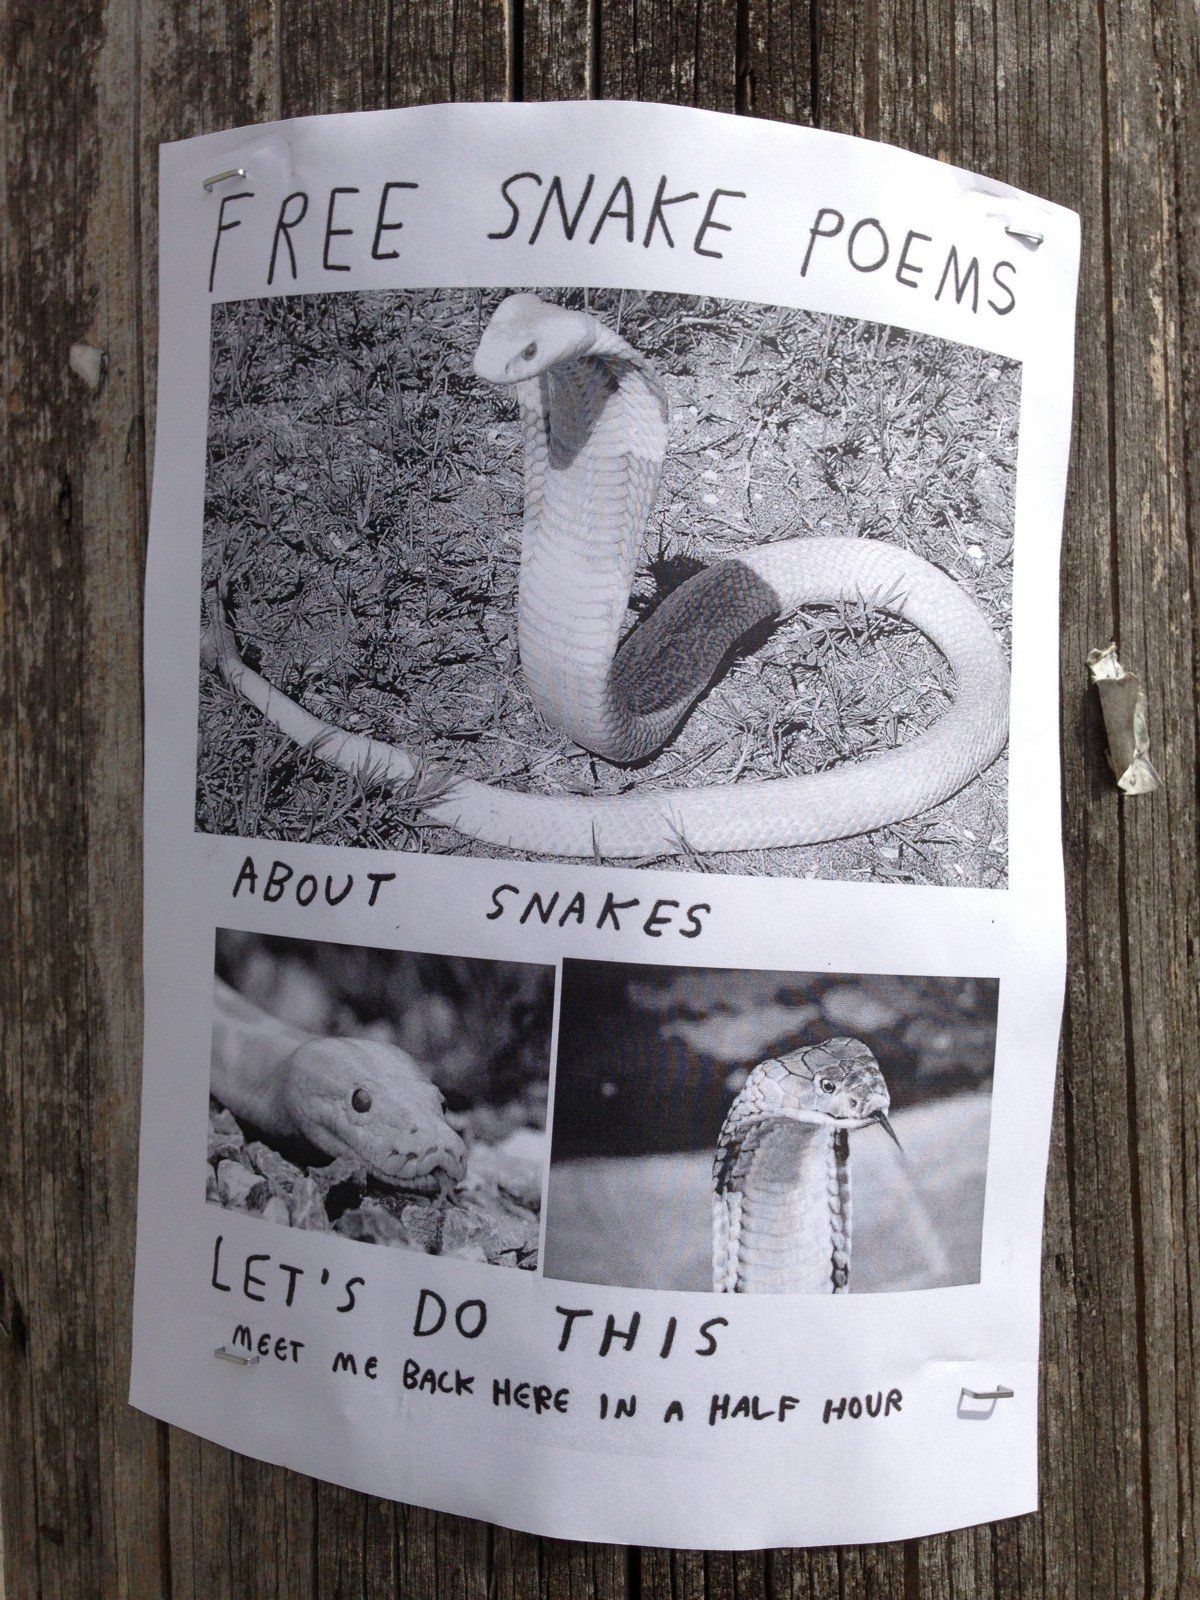 Funny toucan poem